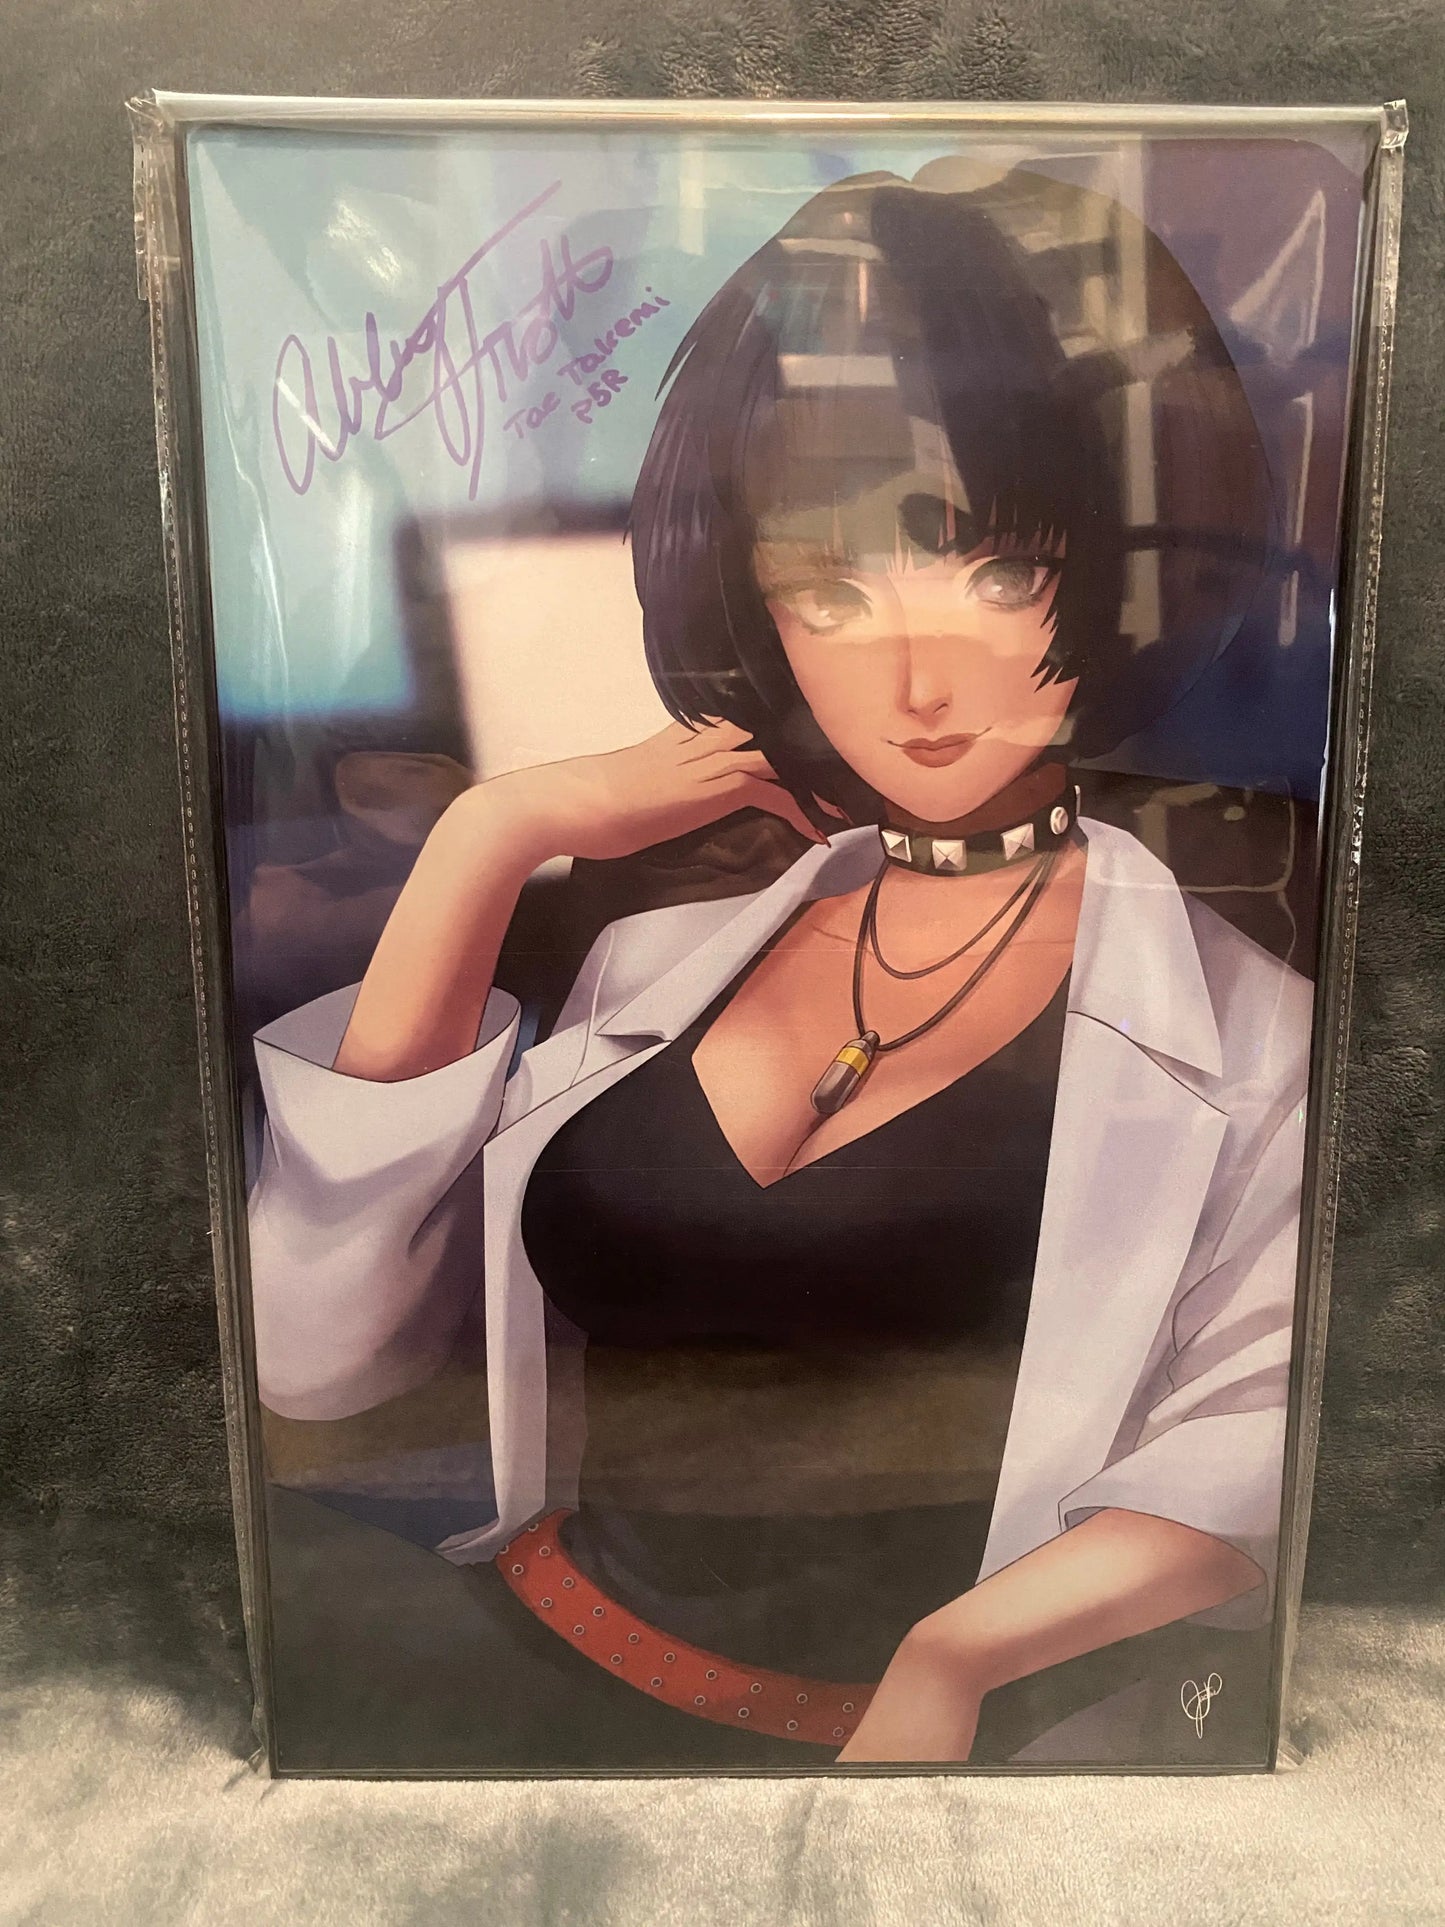 Framed Tae Takemi Persona 5 11x17 print Signed by Abby Trott